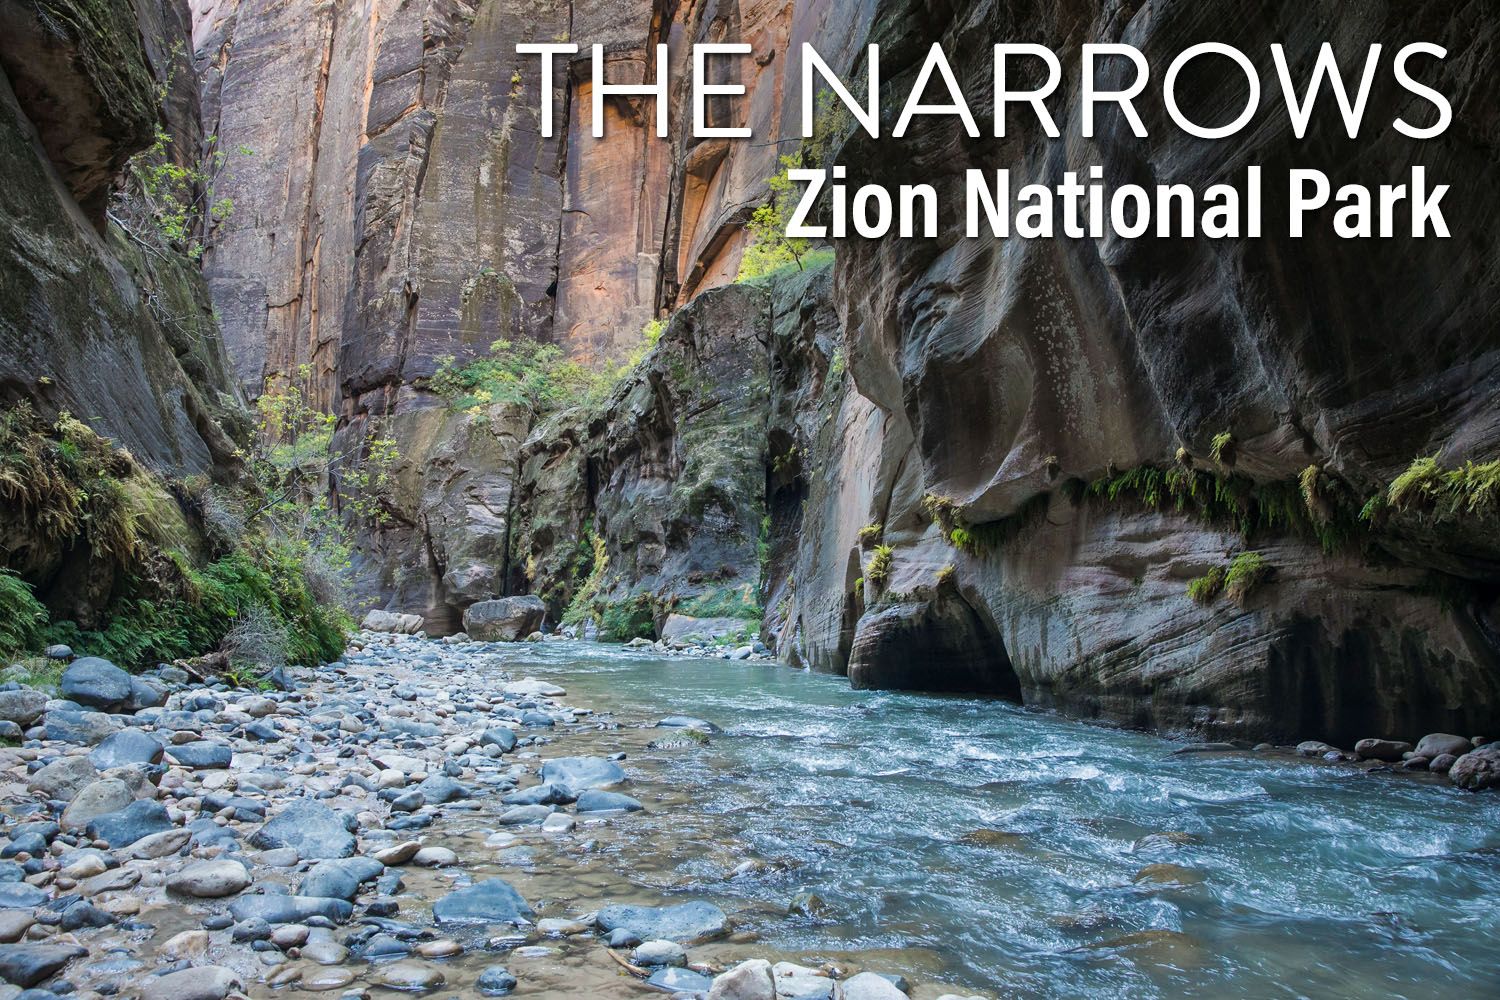 Zion Narrows